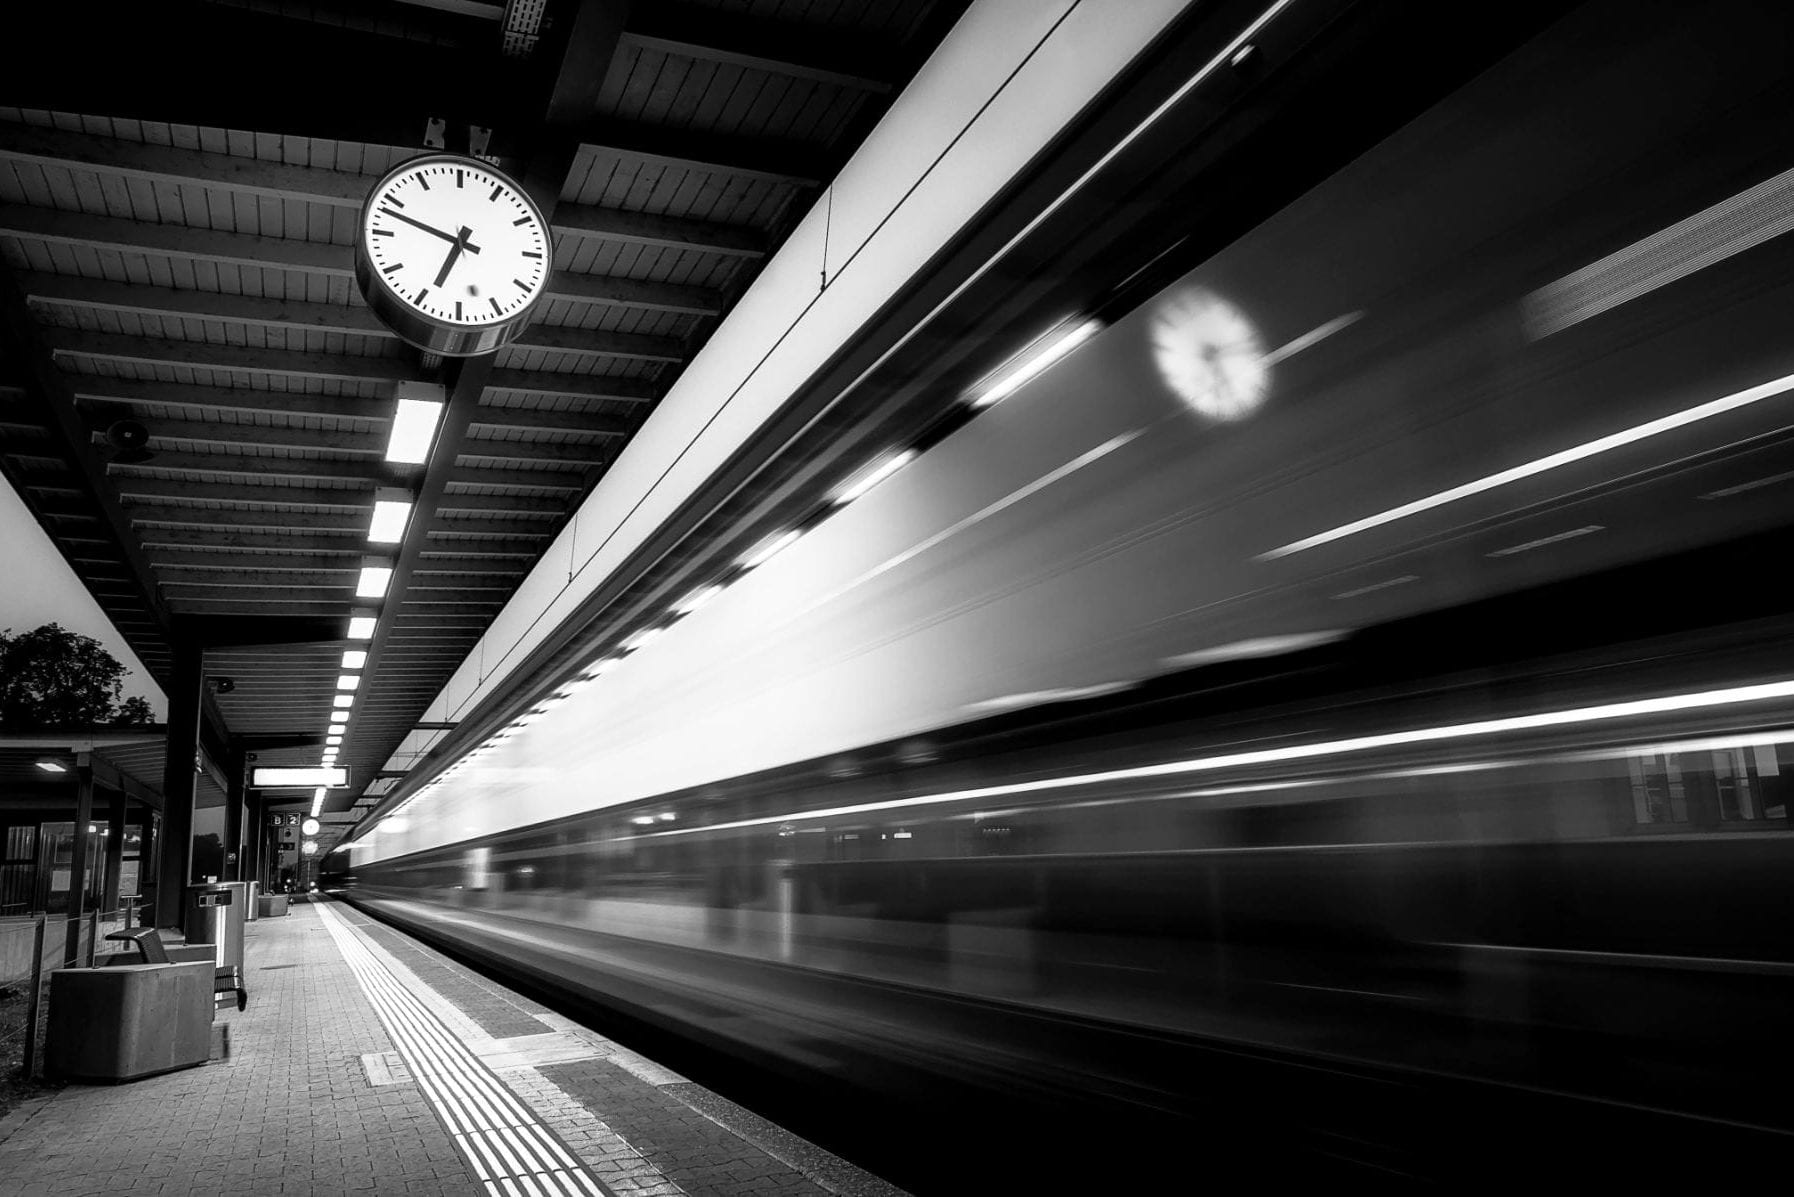 A clock on a train platform with train speeding by